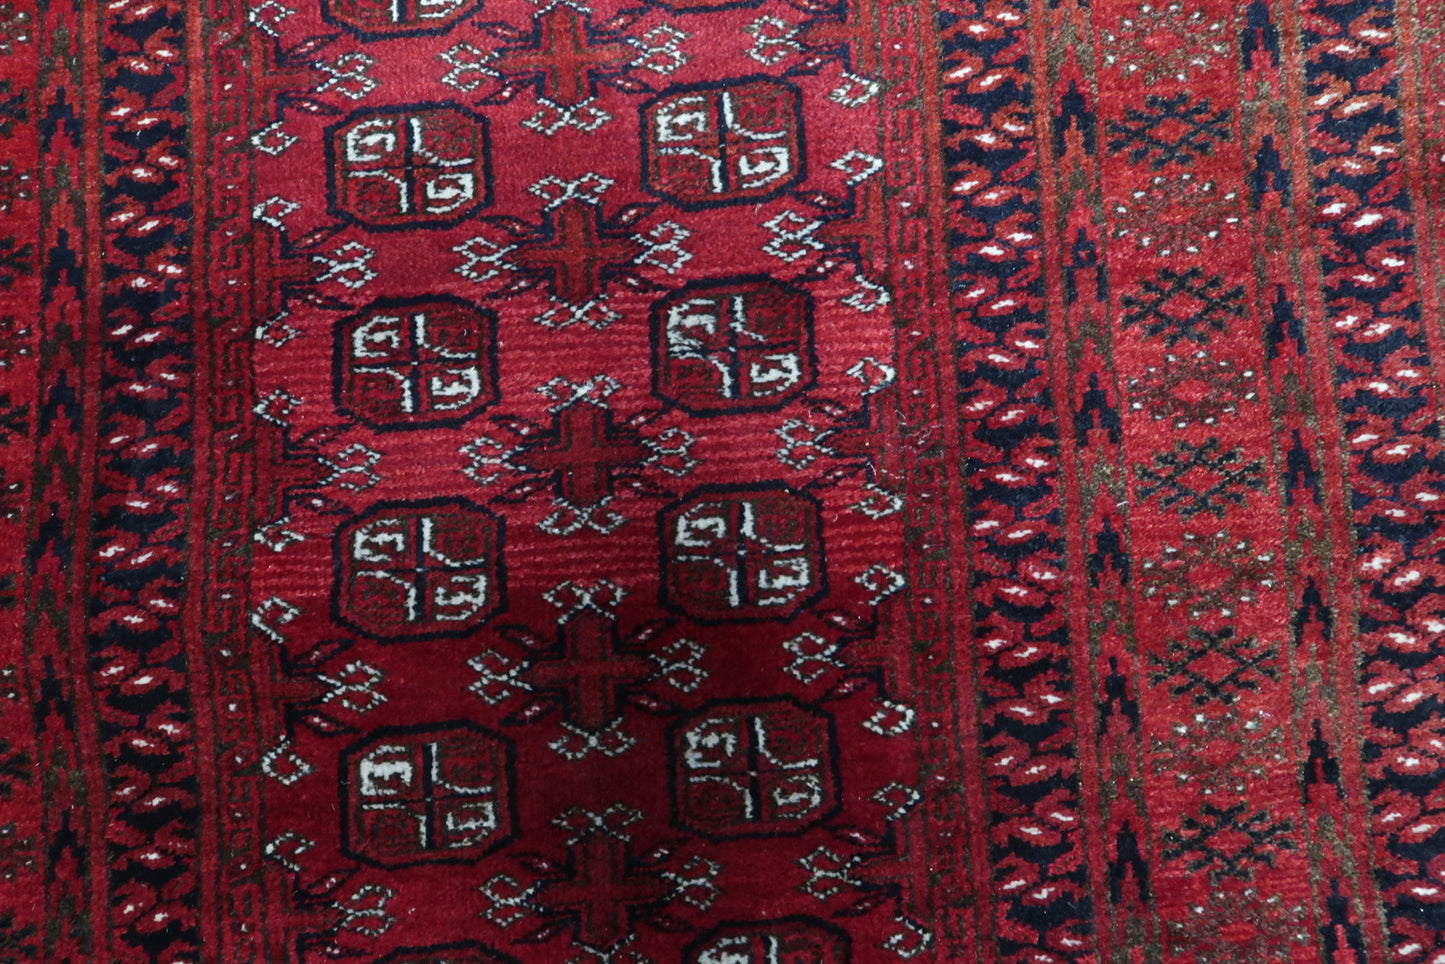 Detailed Knotwork on Vintage Ersari Wool Rug